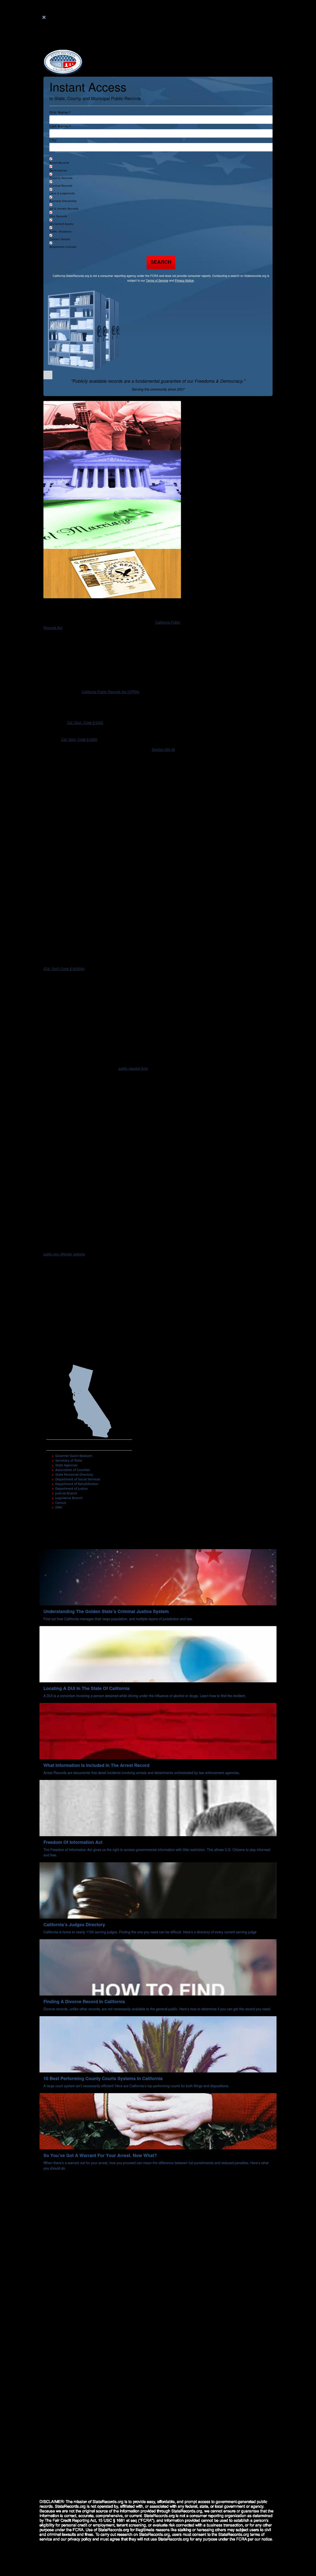 California State Records - Sacramento CA Lawyers